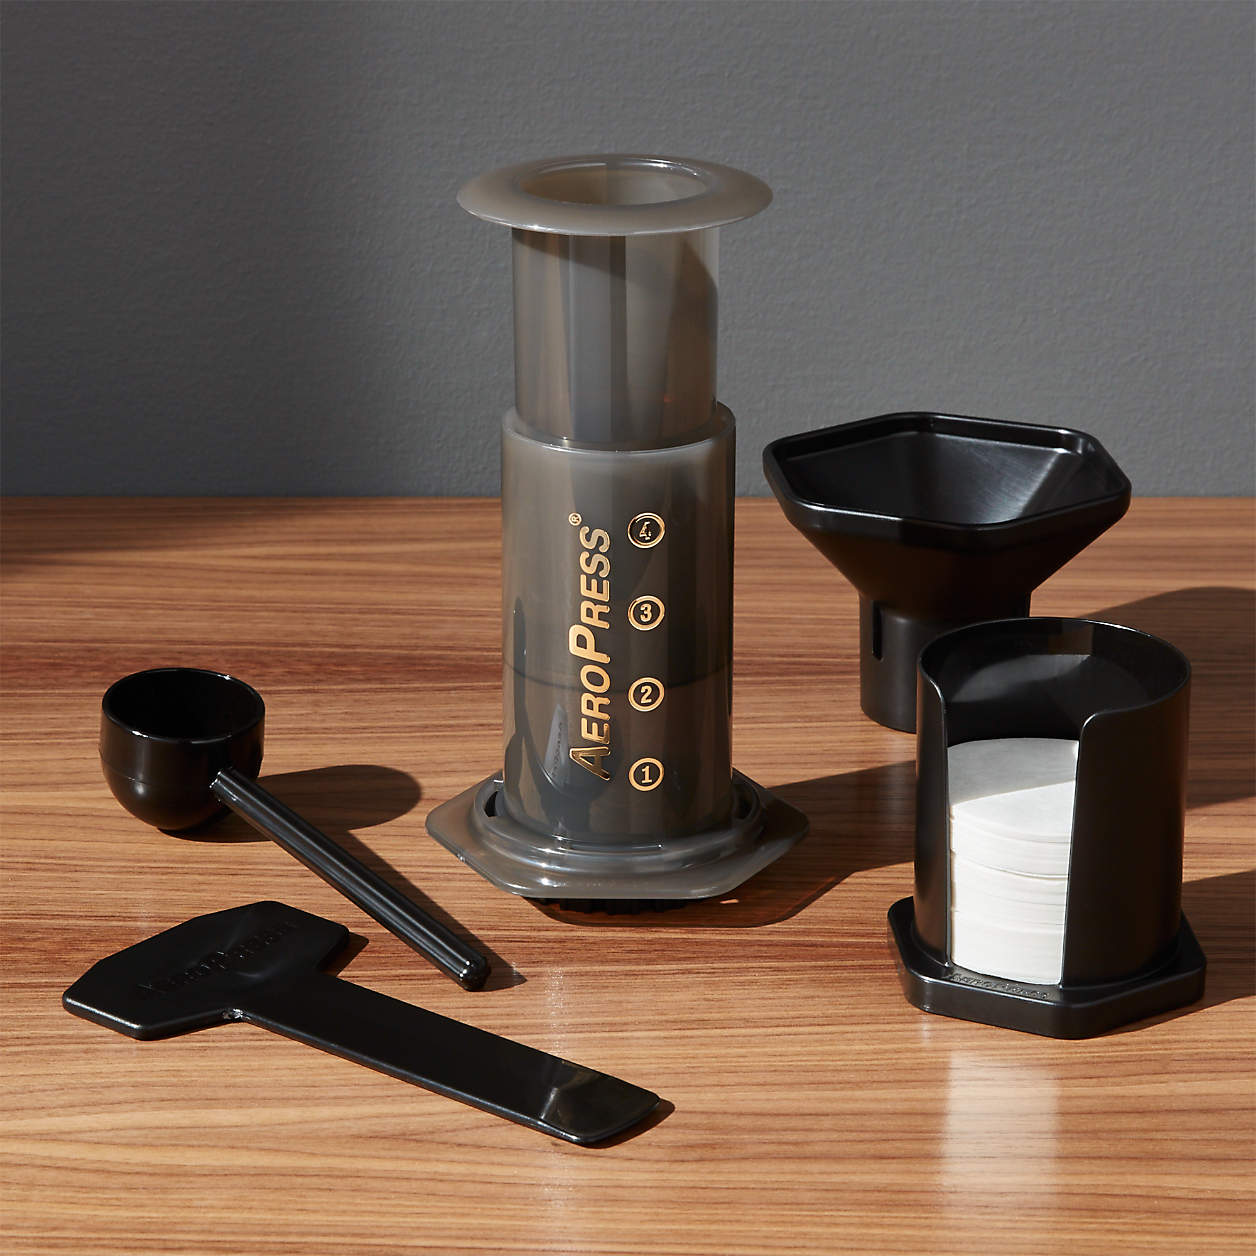 AeroPress Coffee Maker + Reviews | Crate and Barrel